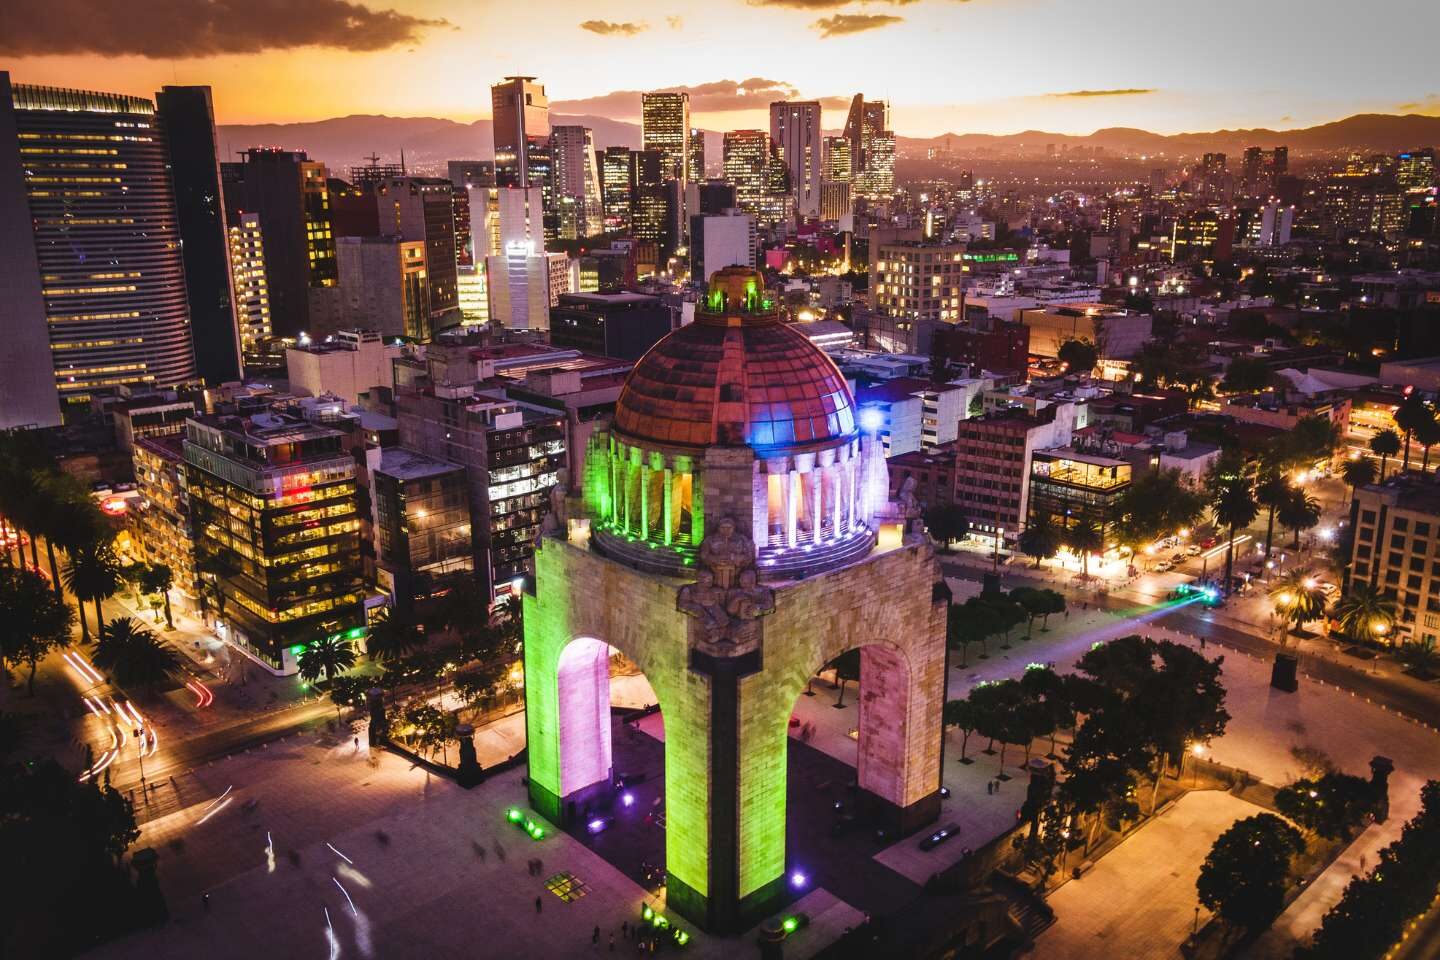 Beautiful night shot in Mexico City